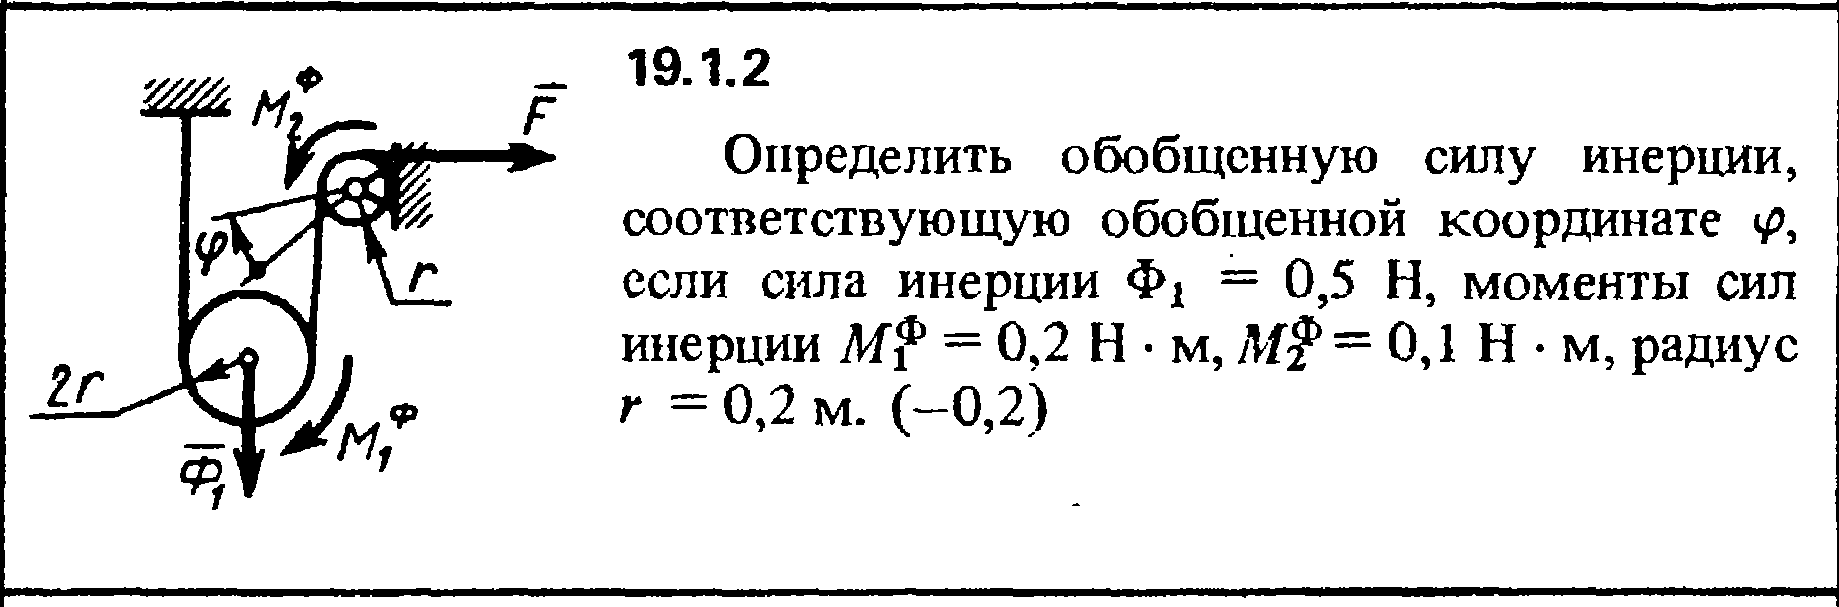 Решение 19.1.2 из сборника (решебника) Кепе О.Е. 1989 г